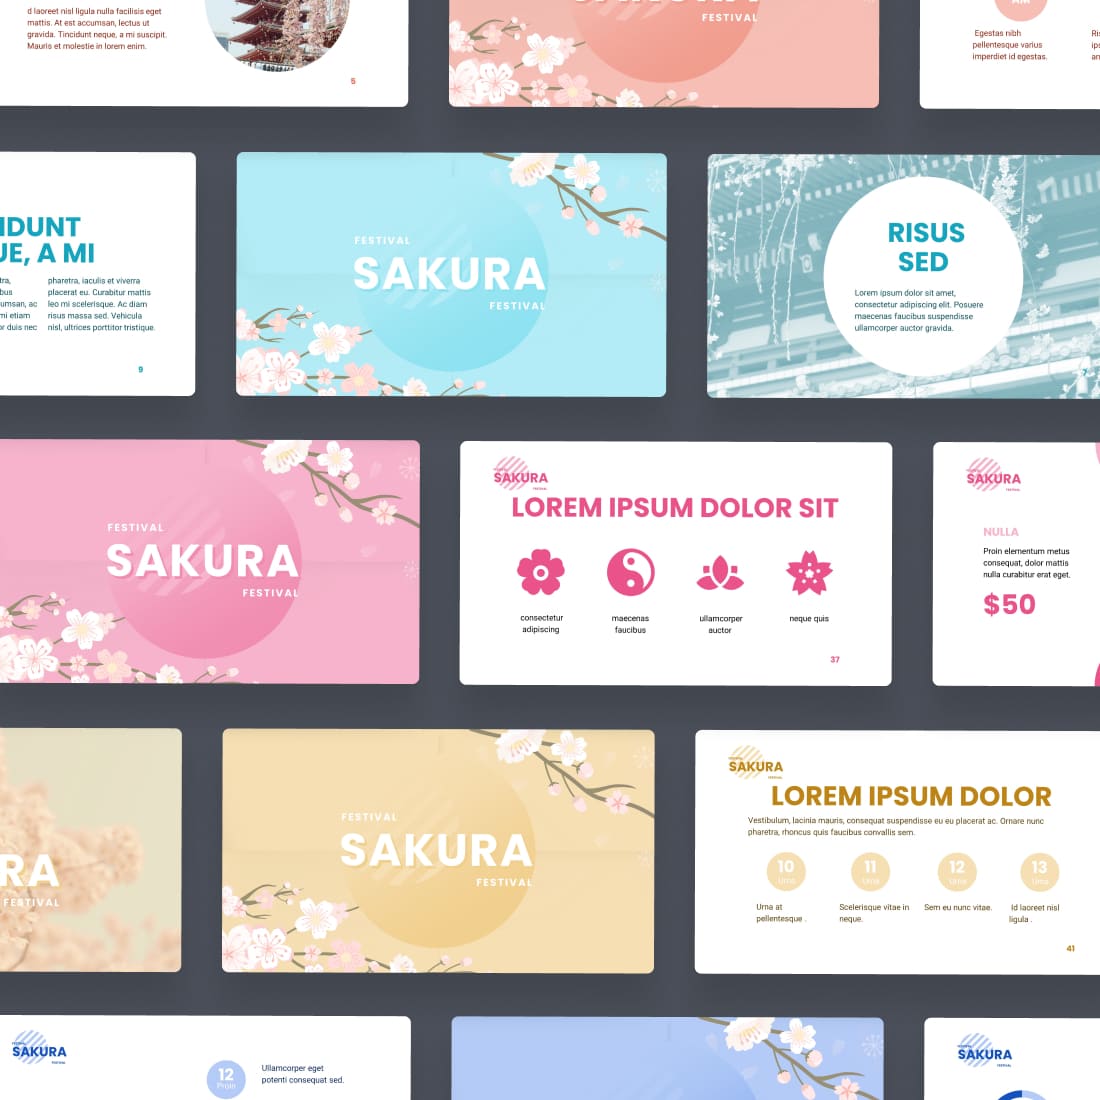 Sakura presentation template cover image.